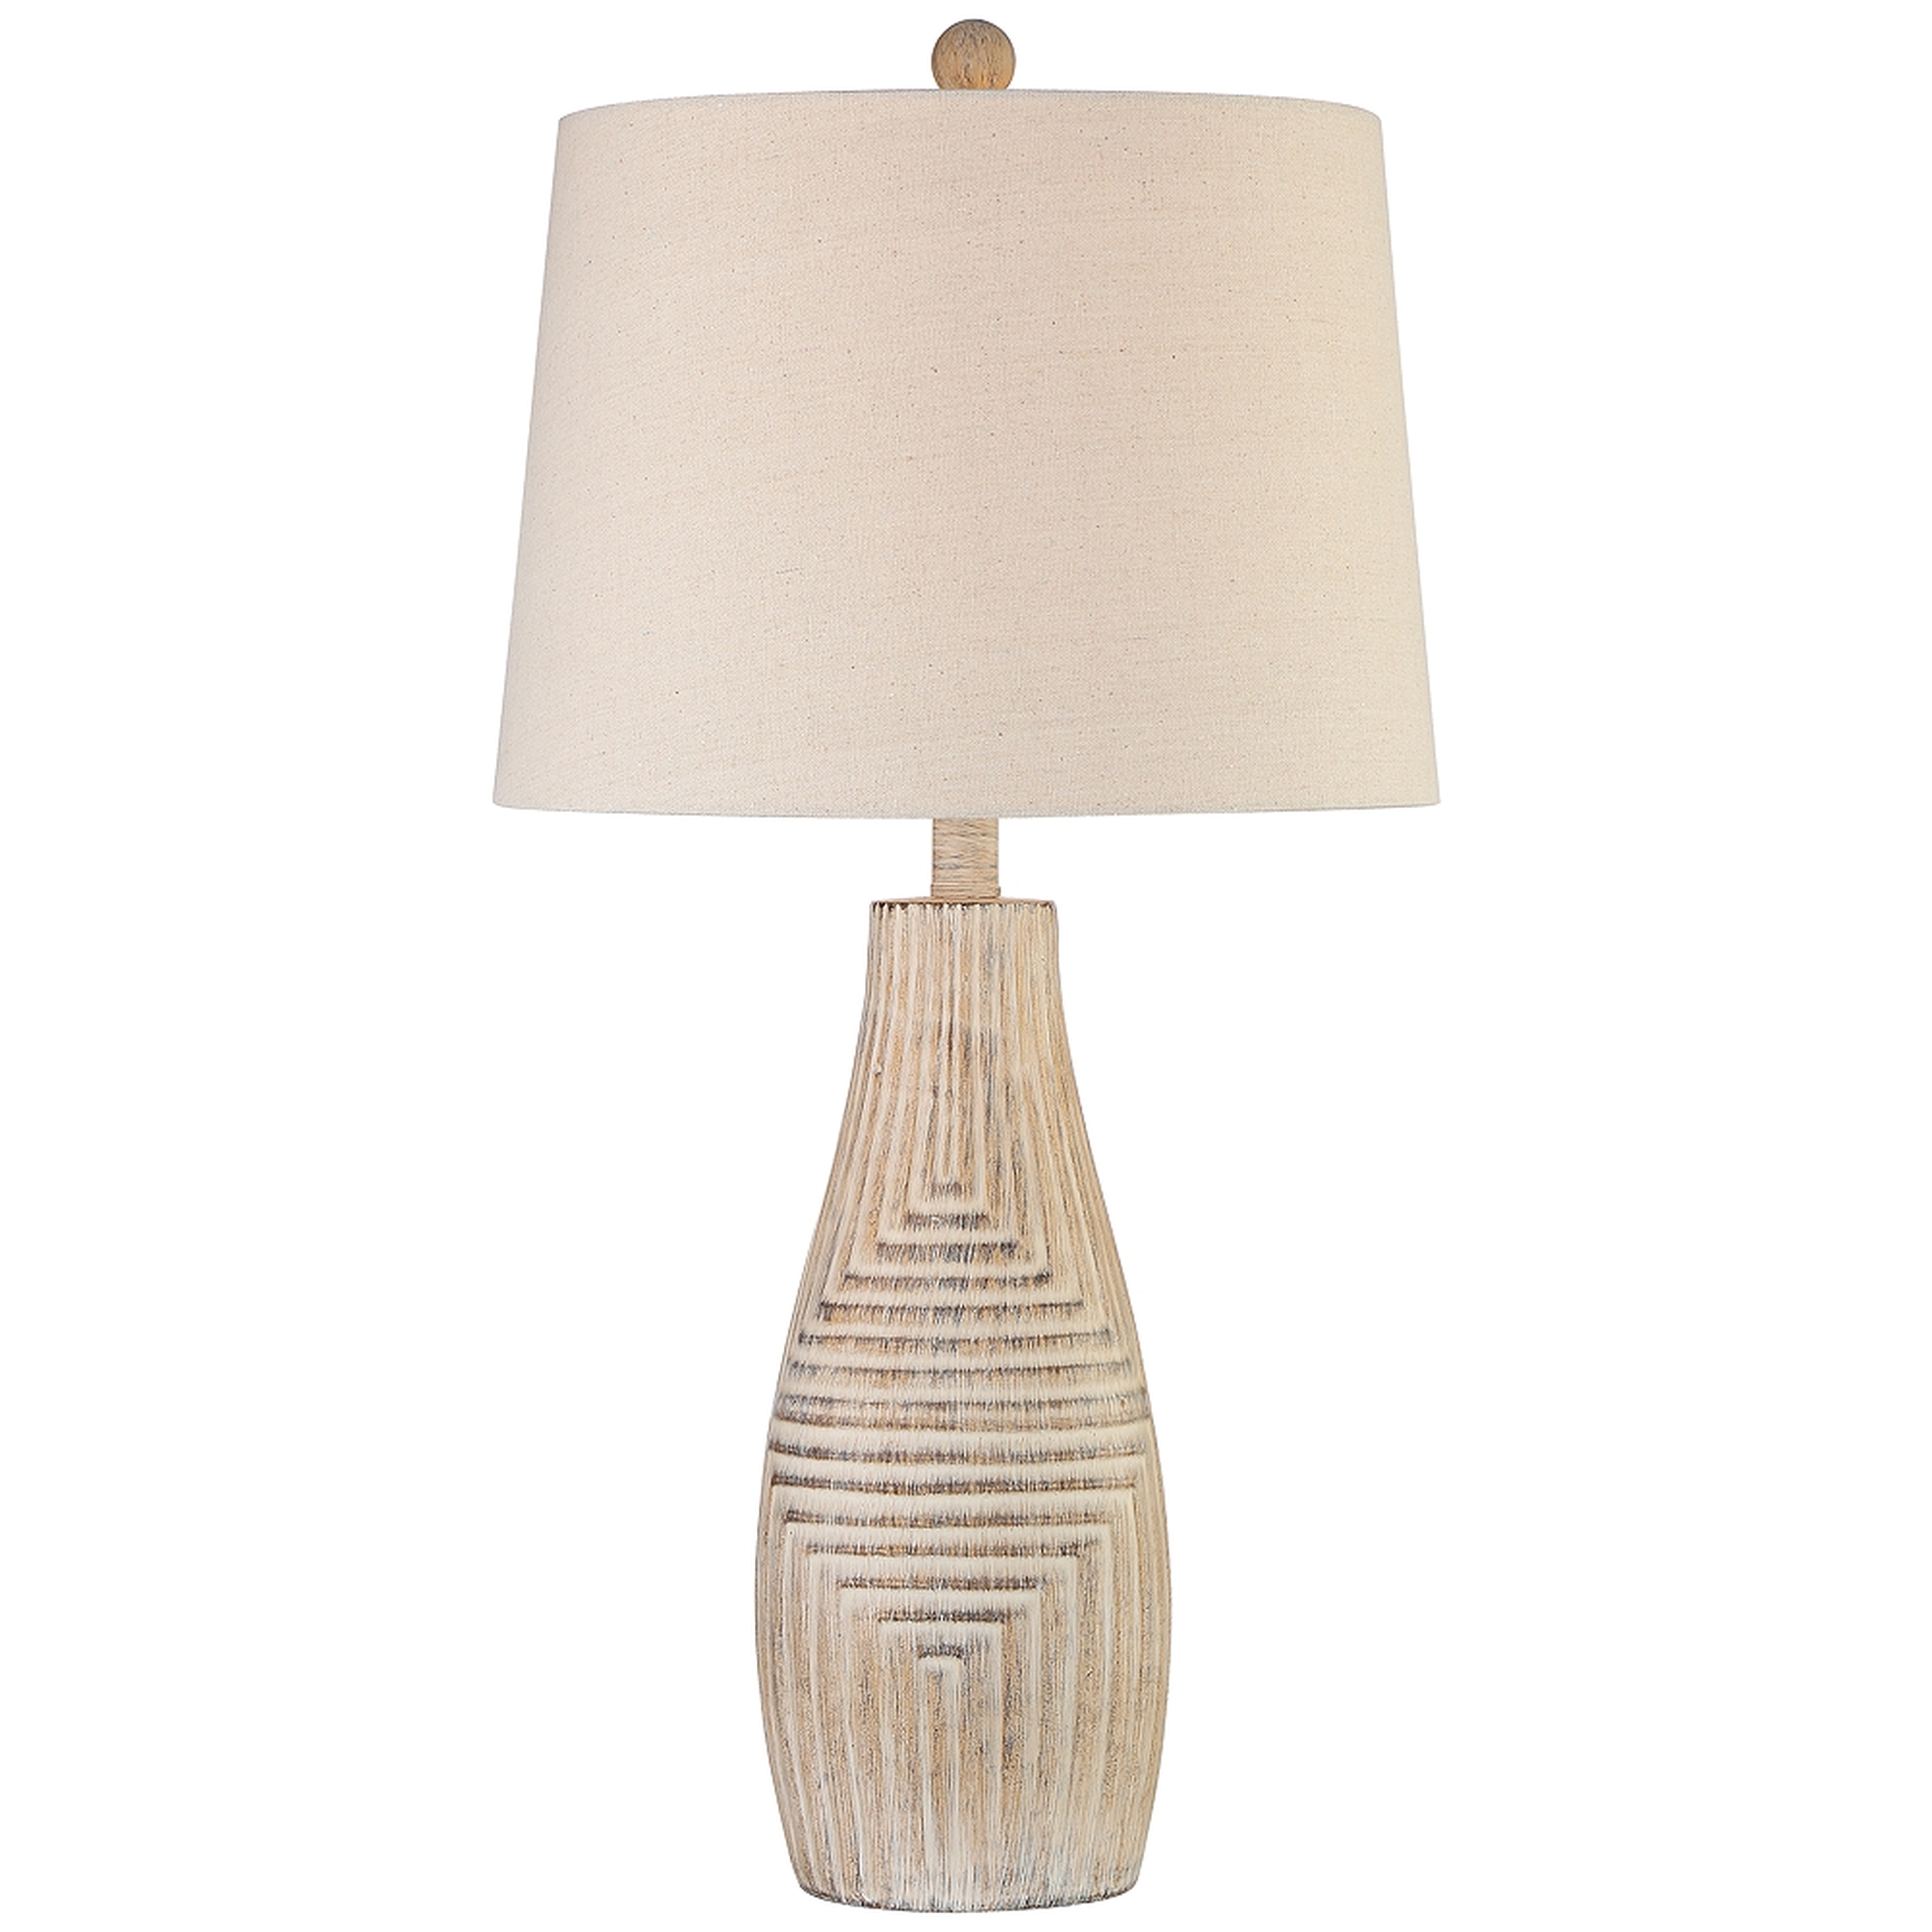 Chico Light Wood Southwest Rustic Table Lamp - Lamps Plus